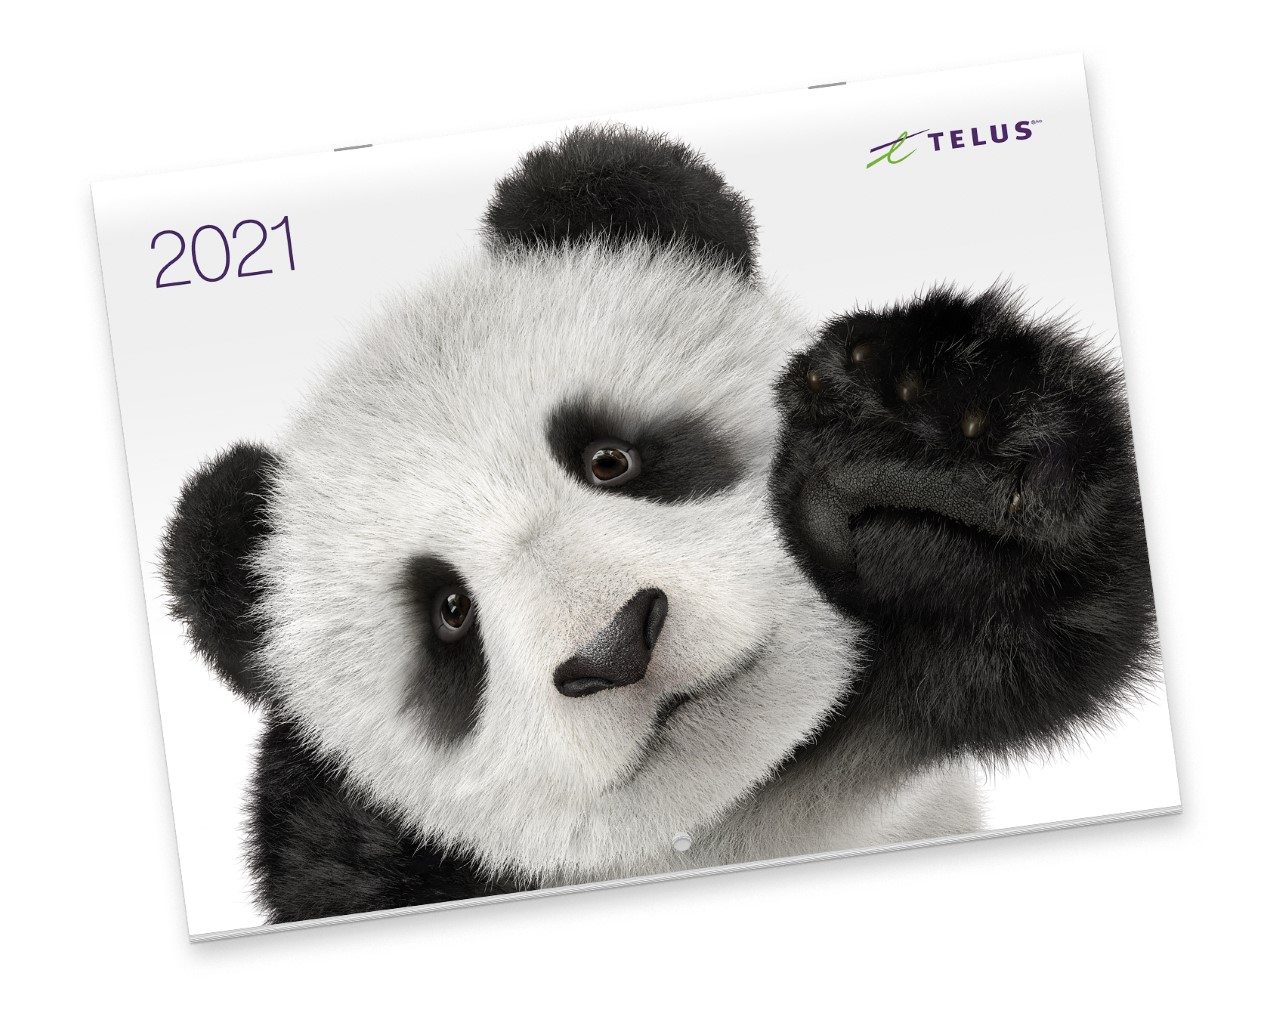 The 2021 TELUS calendar is back.